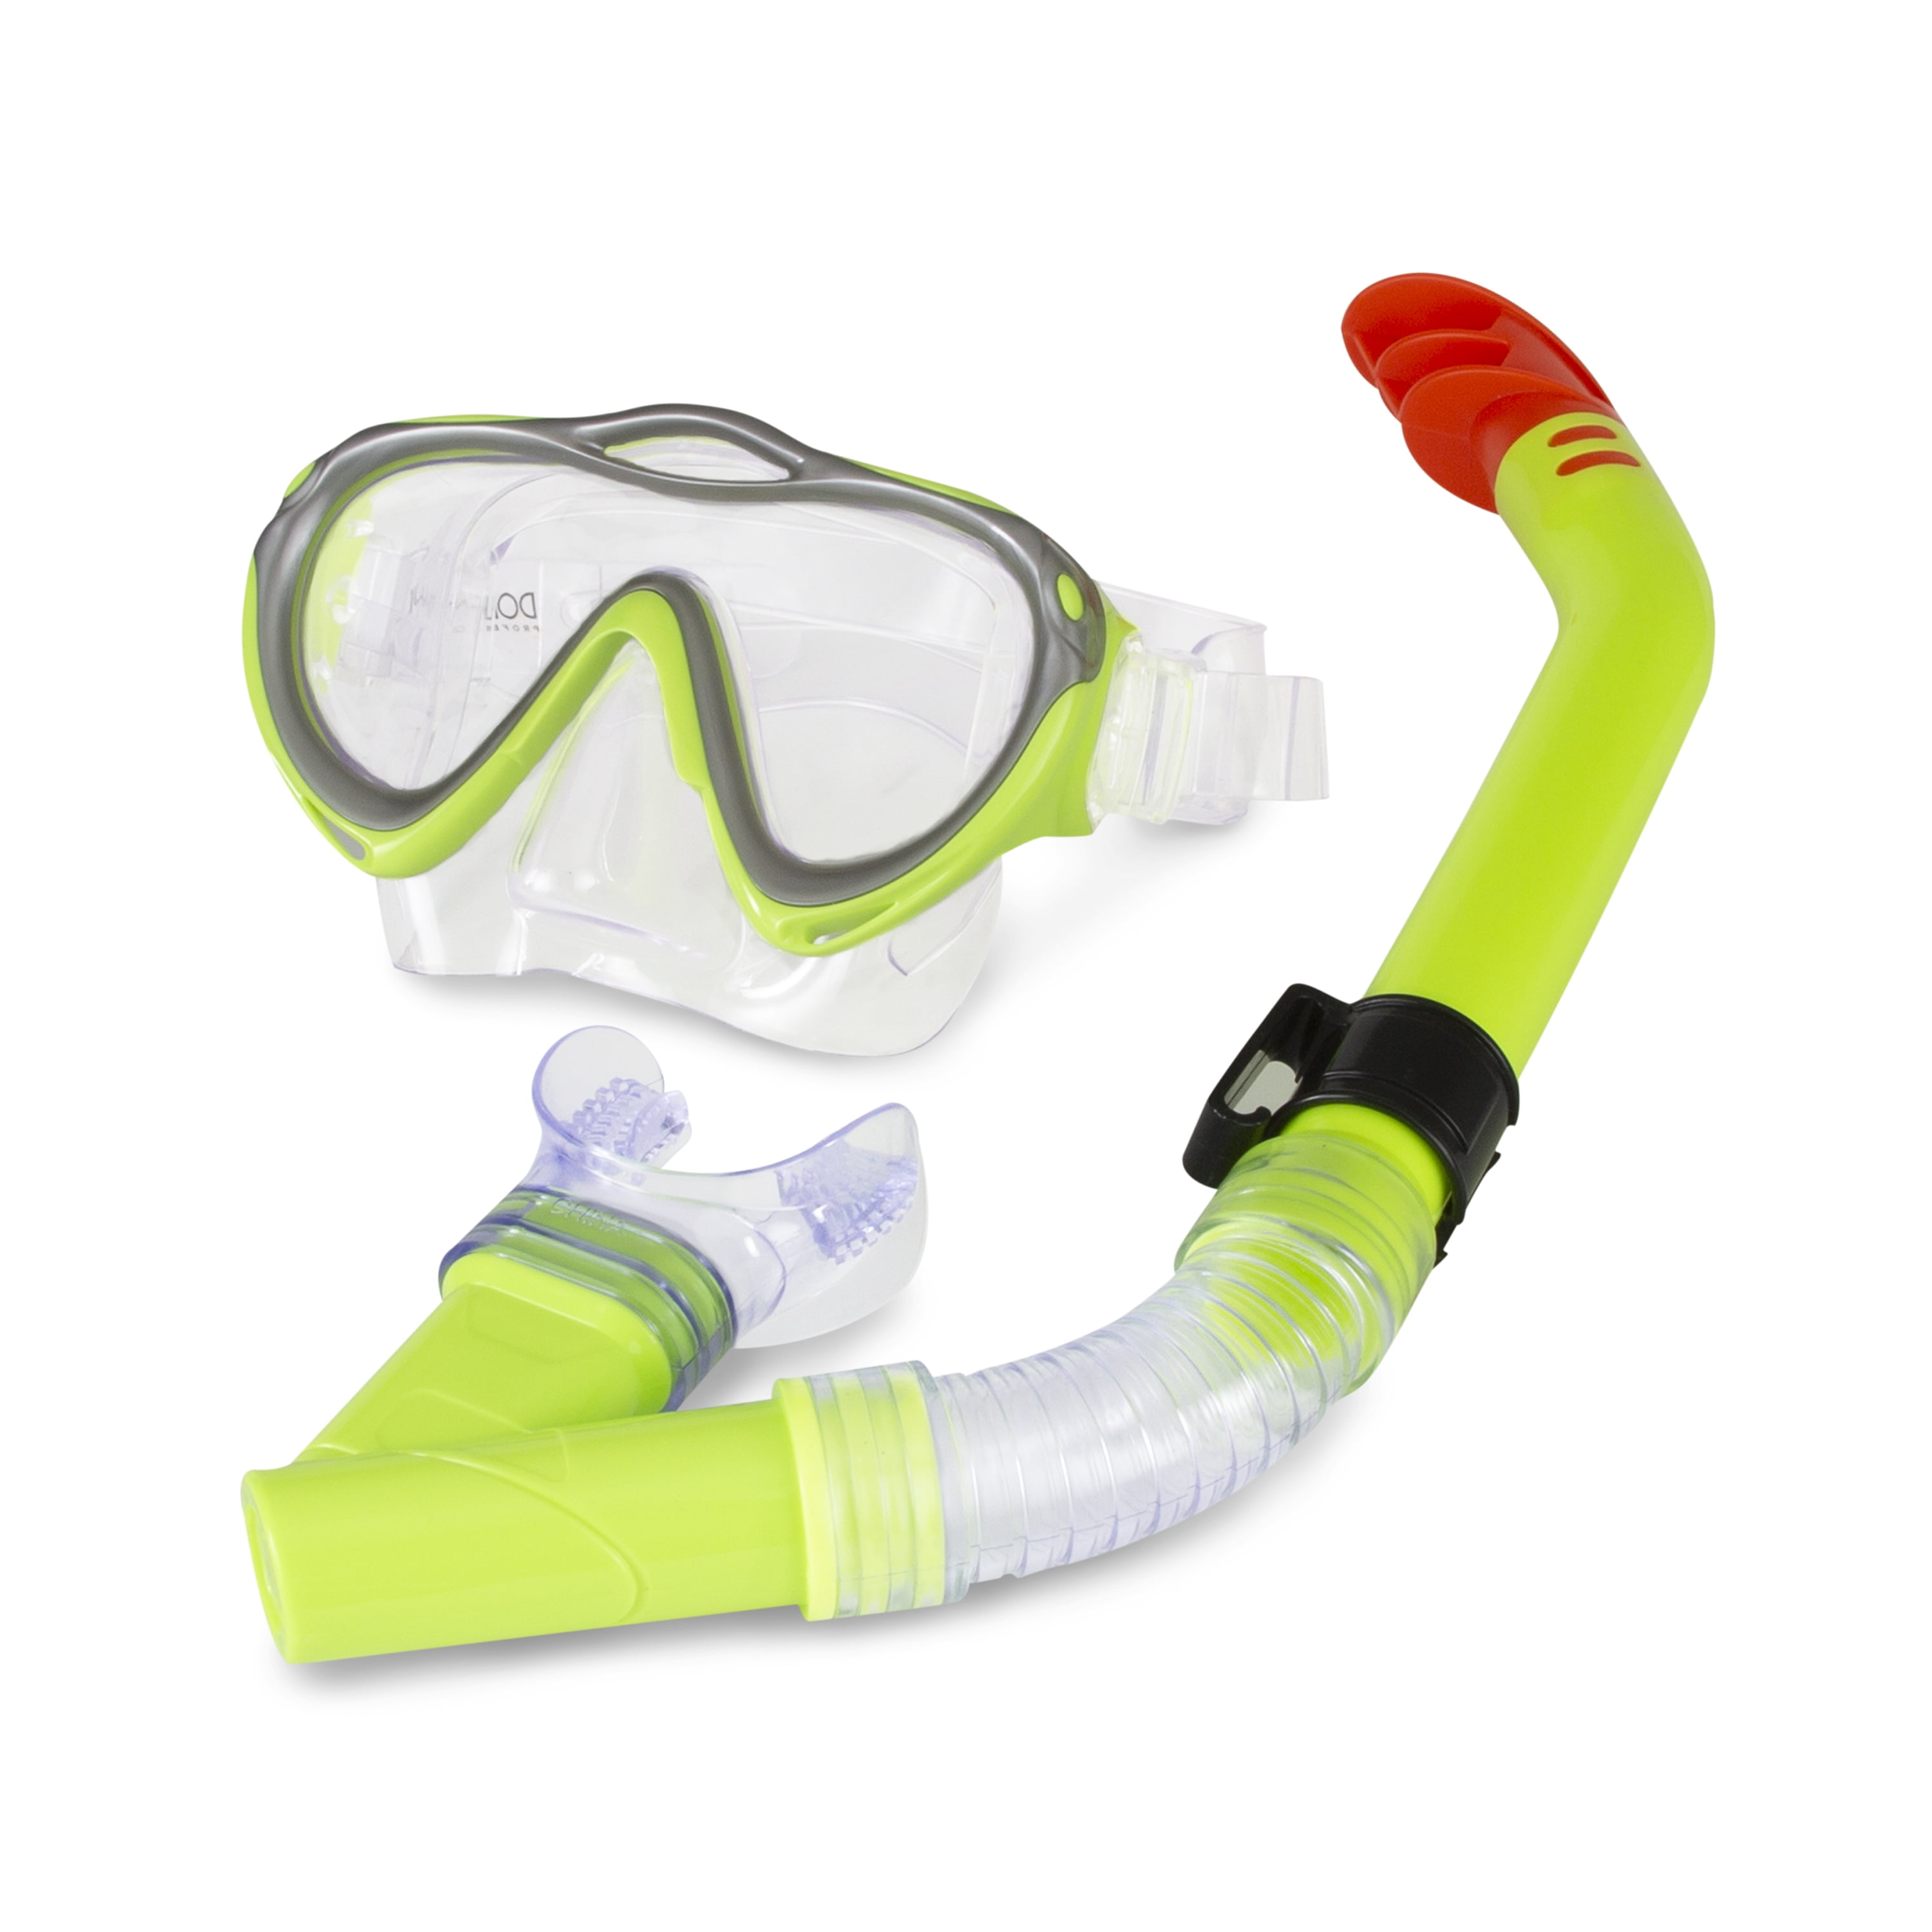 SEAC Set snorkeling masque + tuba adulte BIS EXTREME EVO yellow - Private  Sport Shop